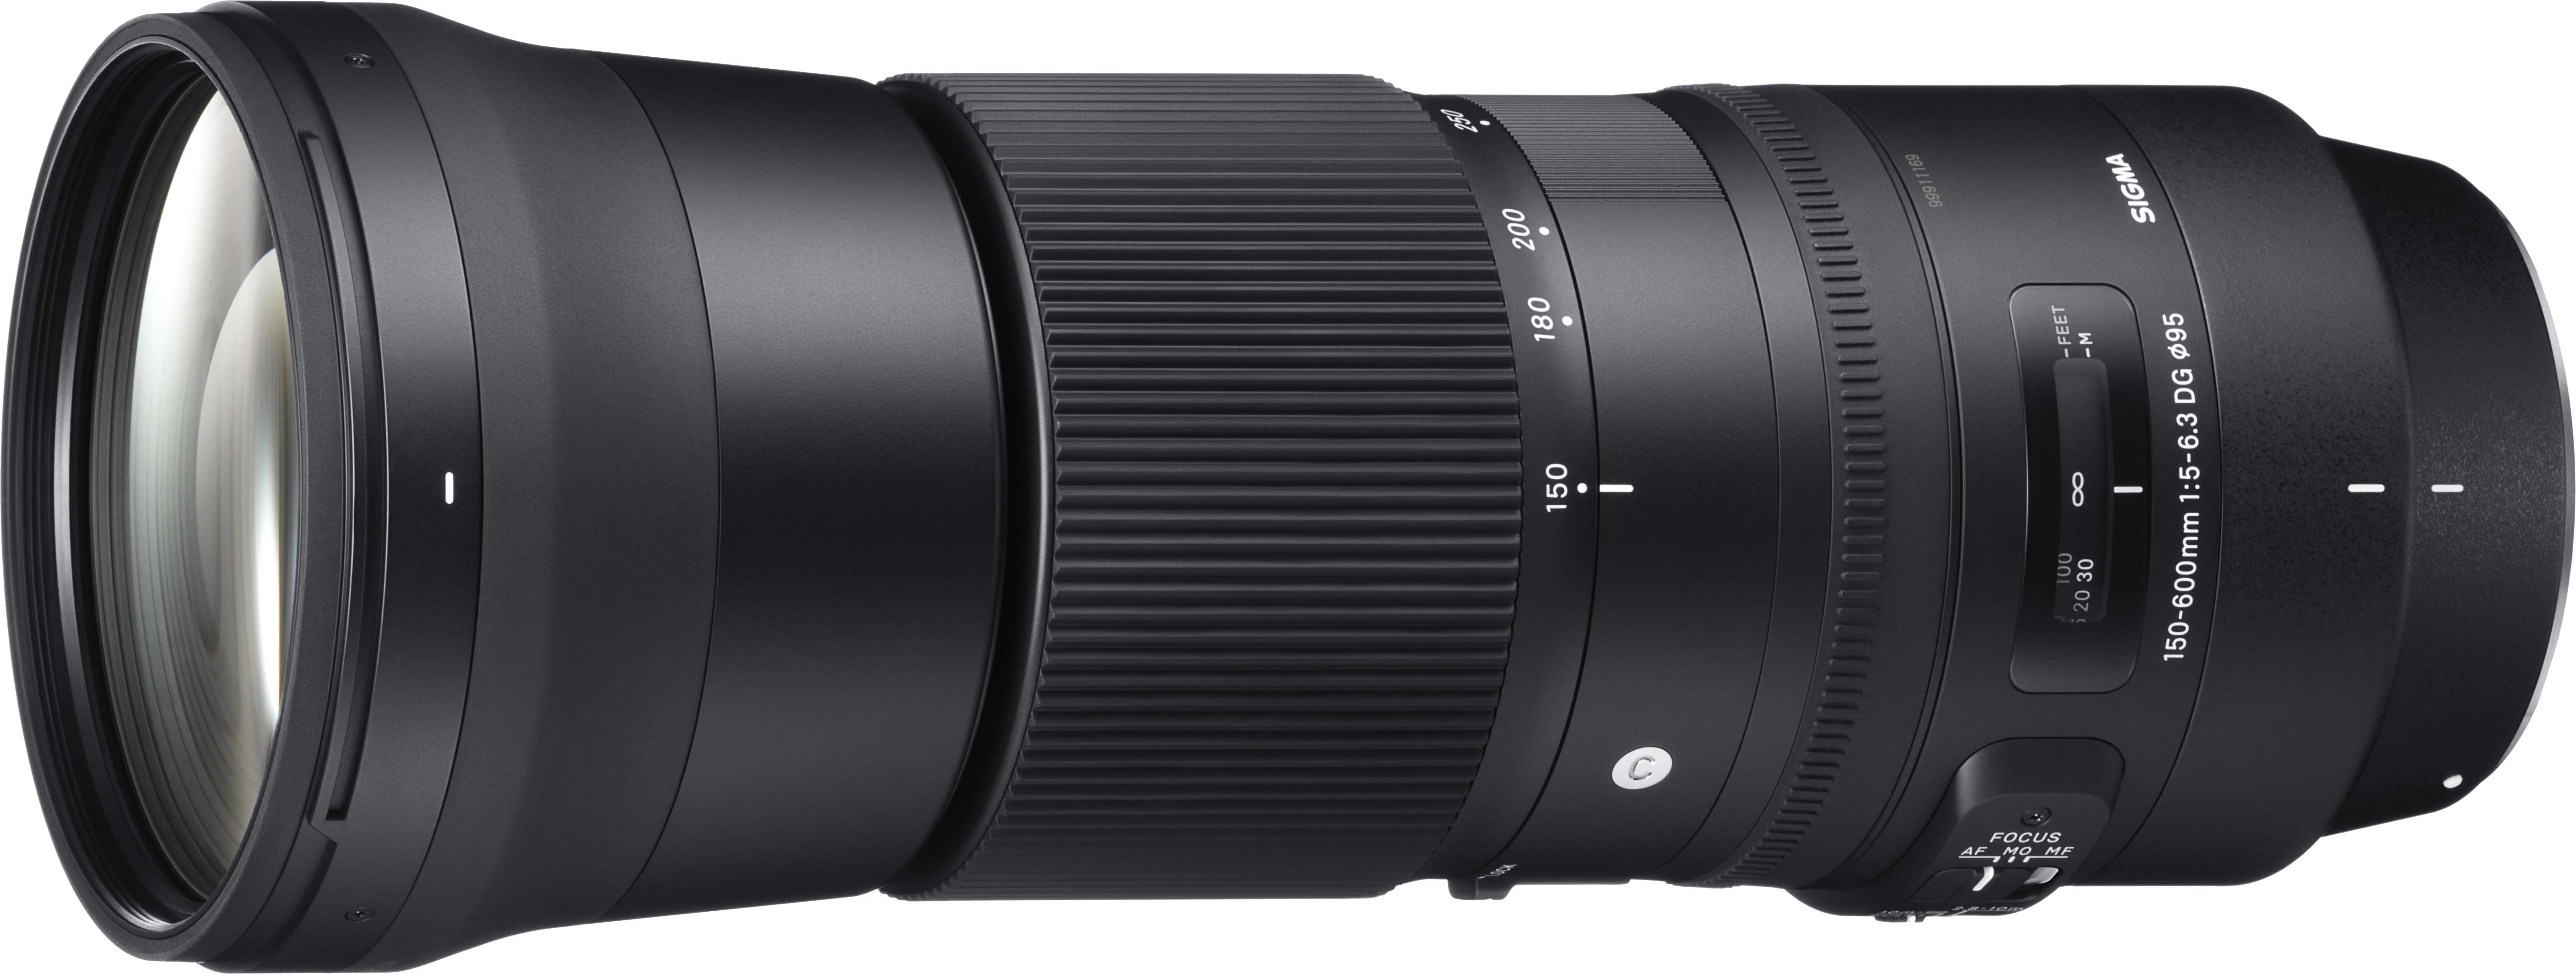 Contemporary 150-600mm F5.0-6.3 DG OS HSM – Nikon F-Mount